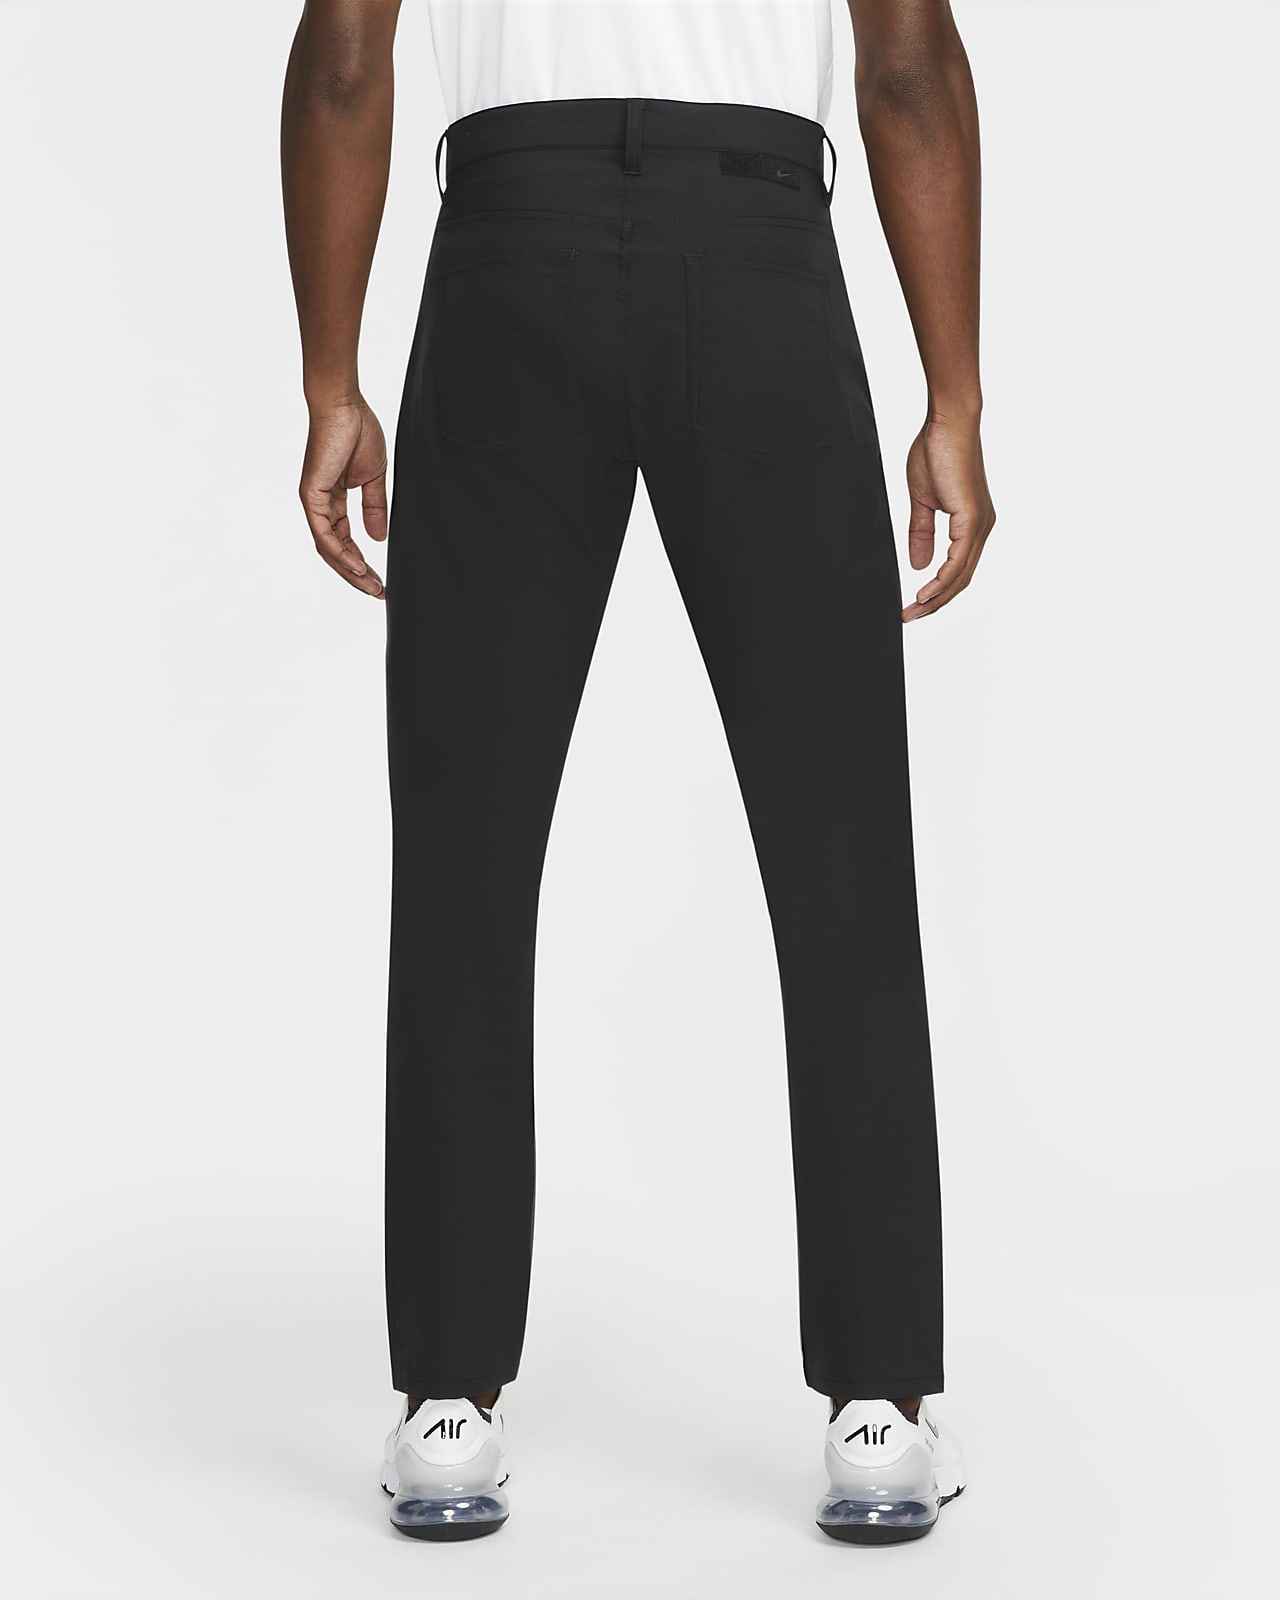 Nike Men039s Flex Slim Fit 6 Pocket Golf Pants Drifit 38 x 32 Gray  BV0278042  eBay